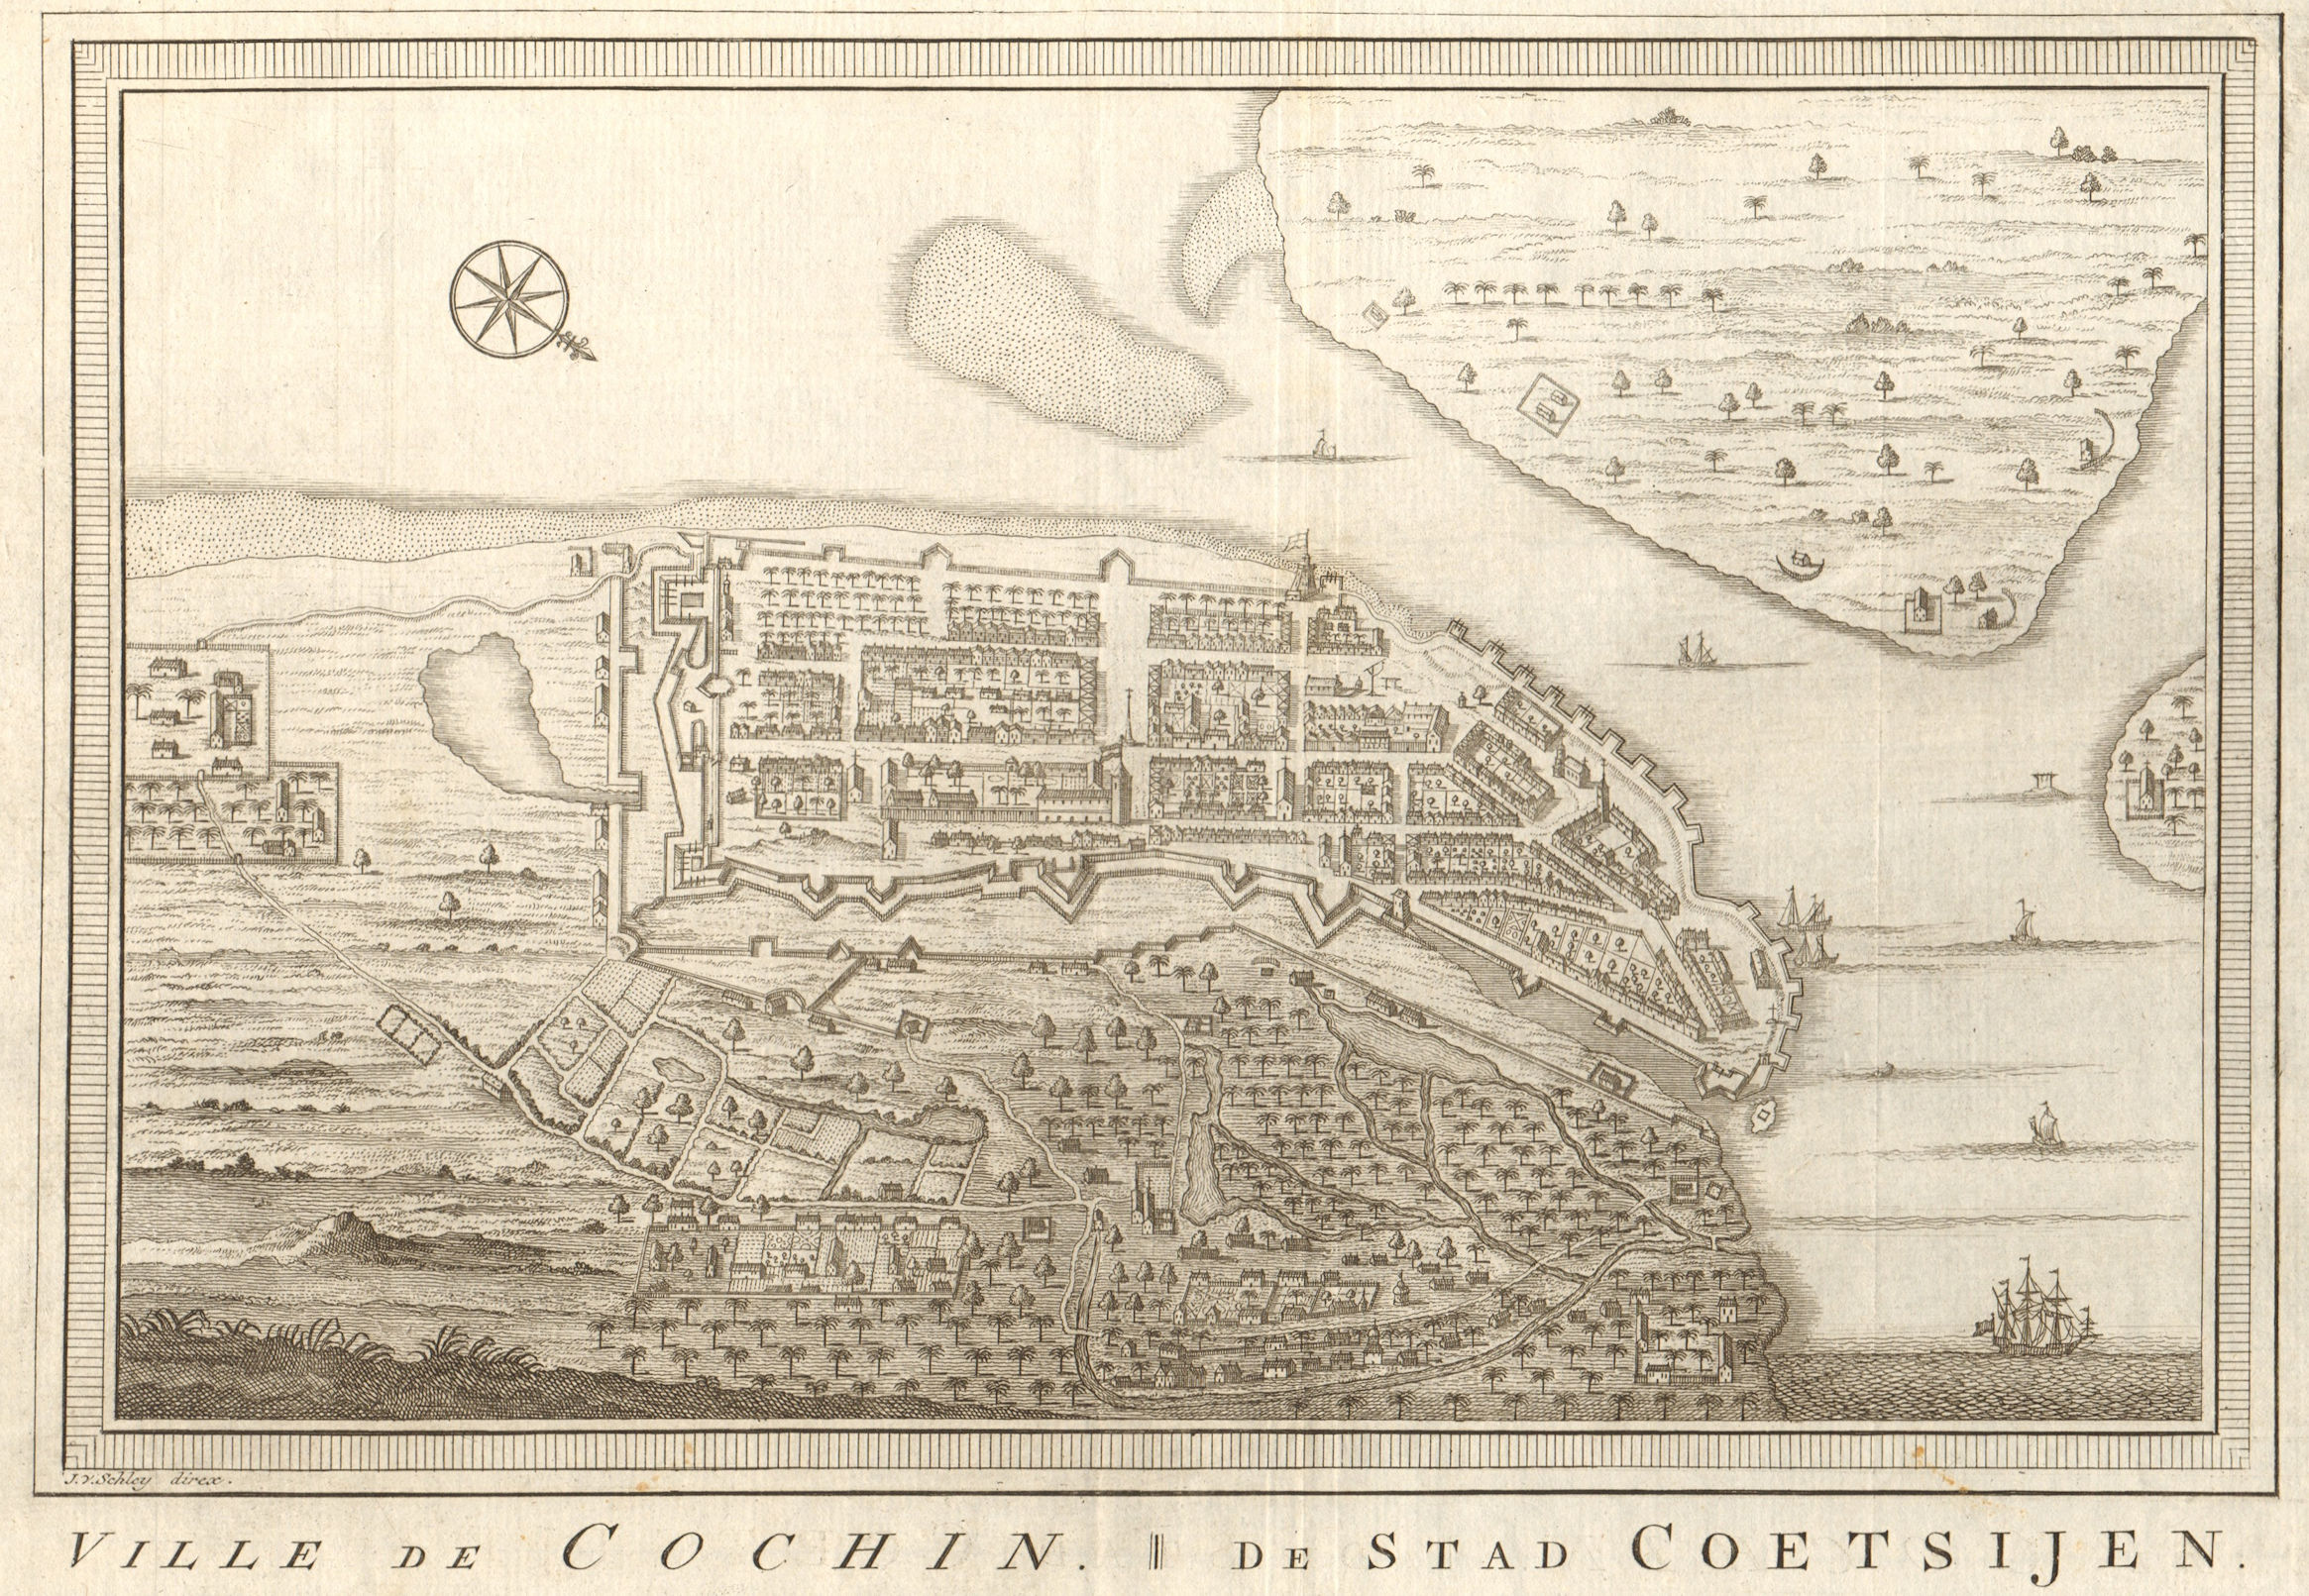 'Ville de Cochin'. India. Kochi town city plan. BELLIN / SCHLEY 1755 old map